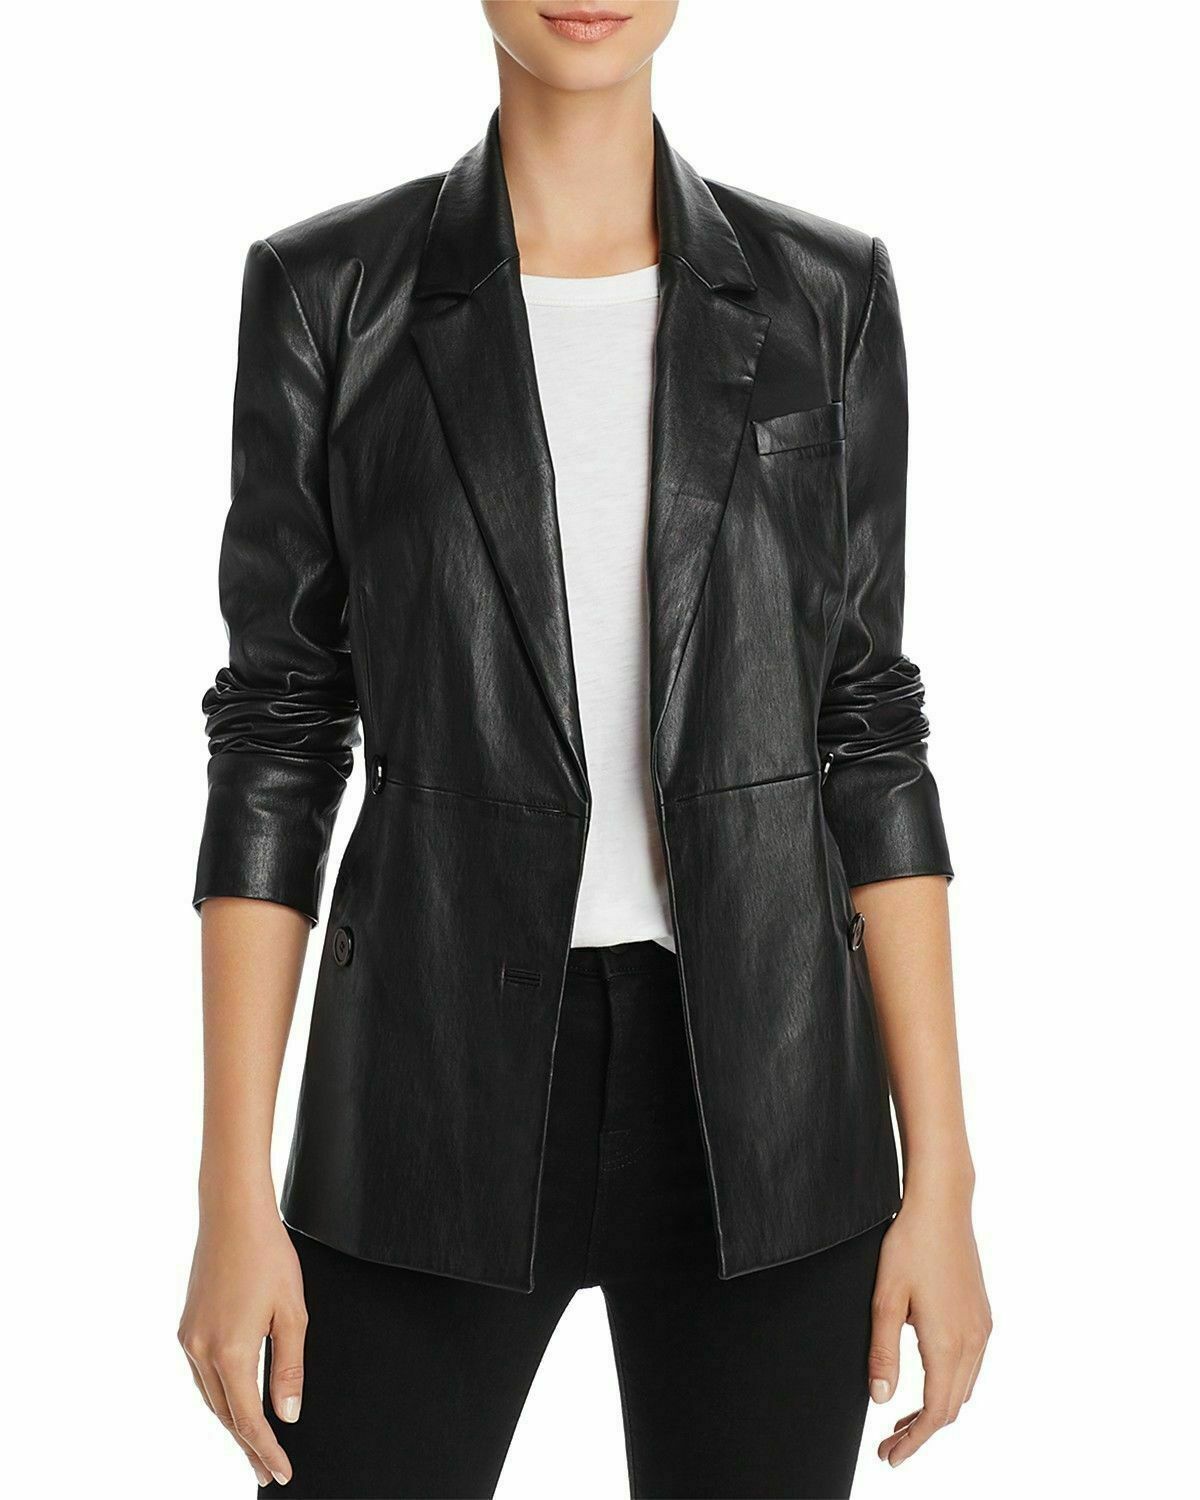 Womens Black Leather Blazer Genuine Lambskin Size Xs S M L Xl Xxl Custom Made Coats Jackets